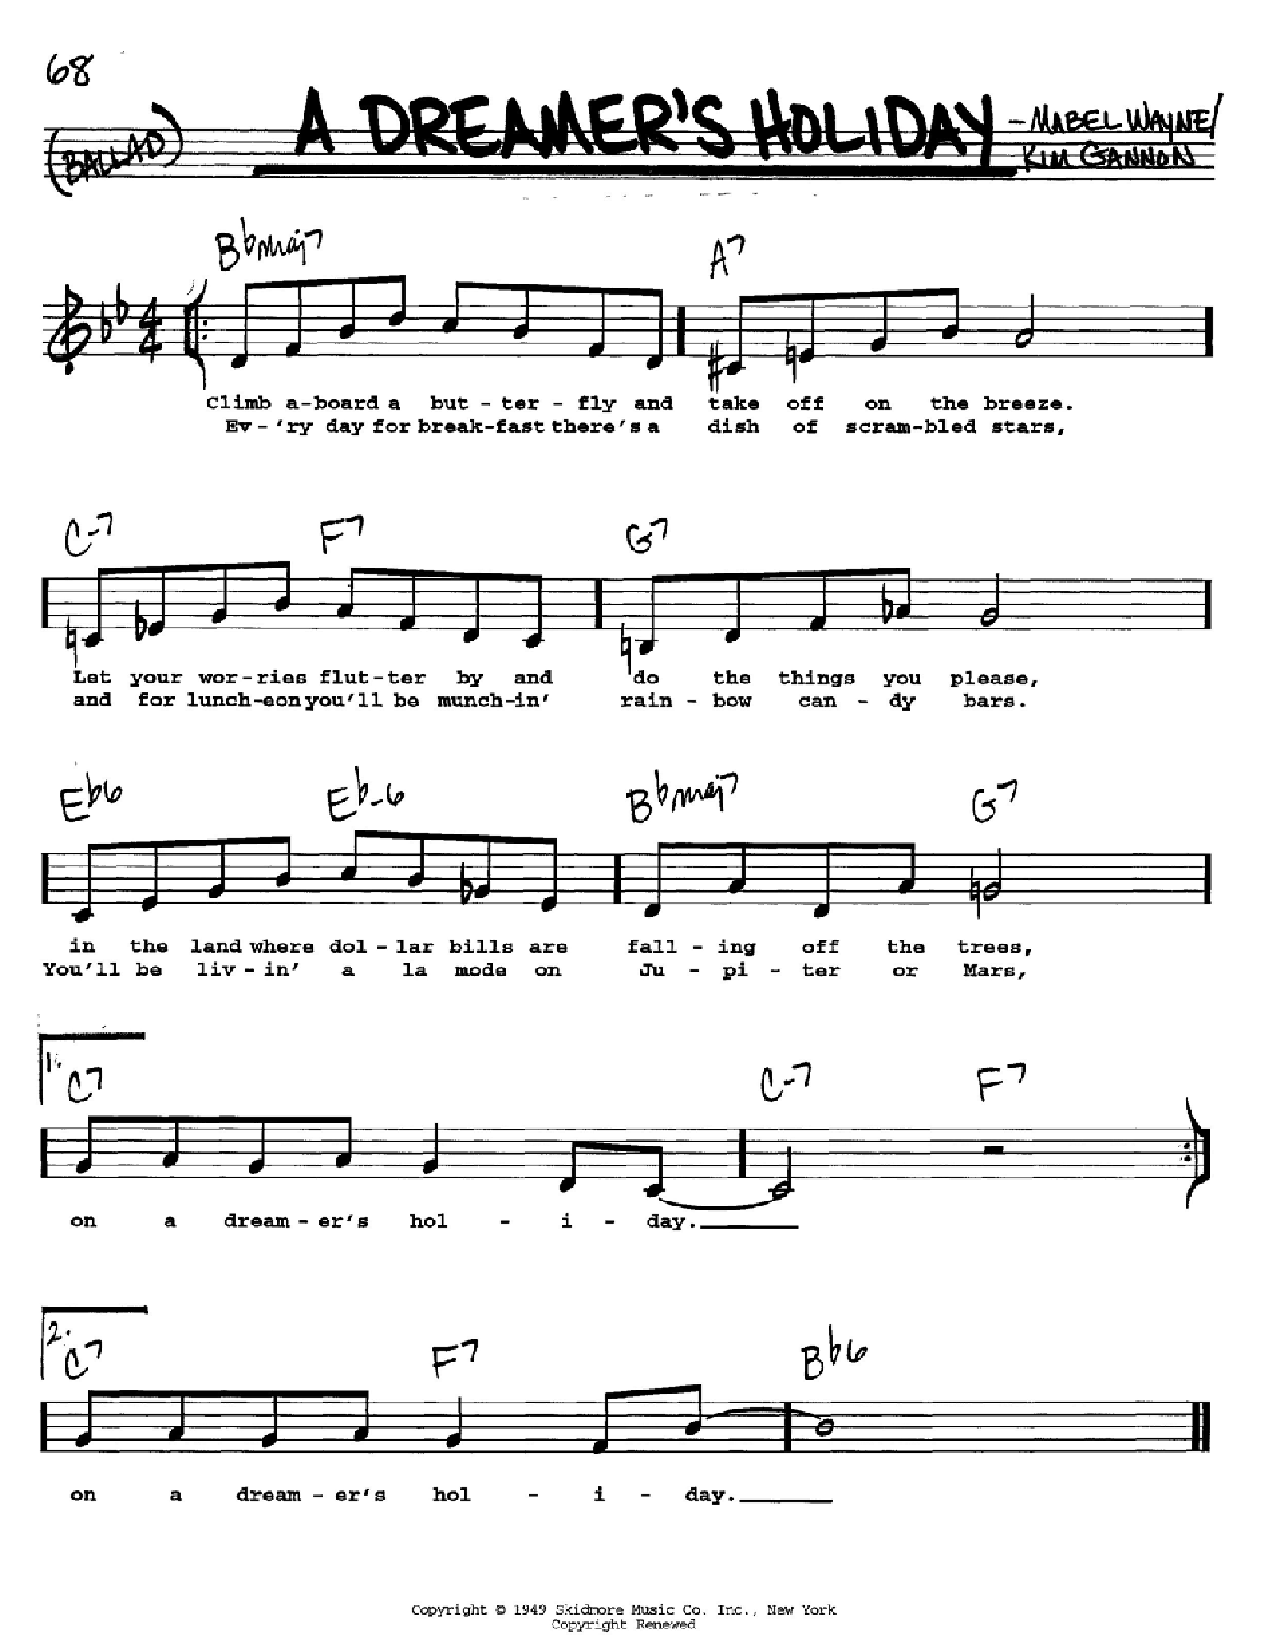 Mabel Wayne A Dreamer's Holiday Sheet Music Notes & Chords for Real Book – Melody, Lyrics & Chords – C Instruments - Download or Print PDF